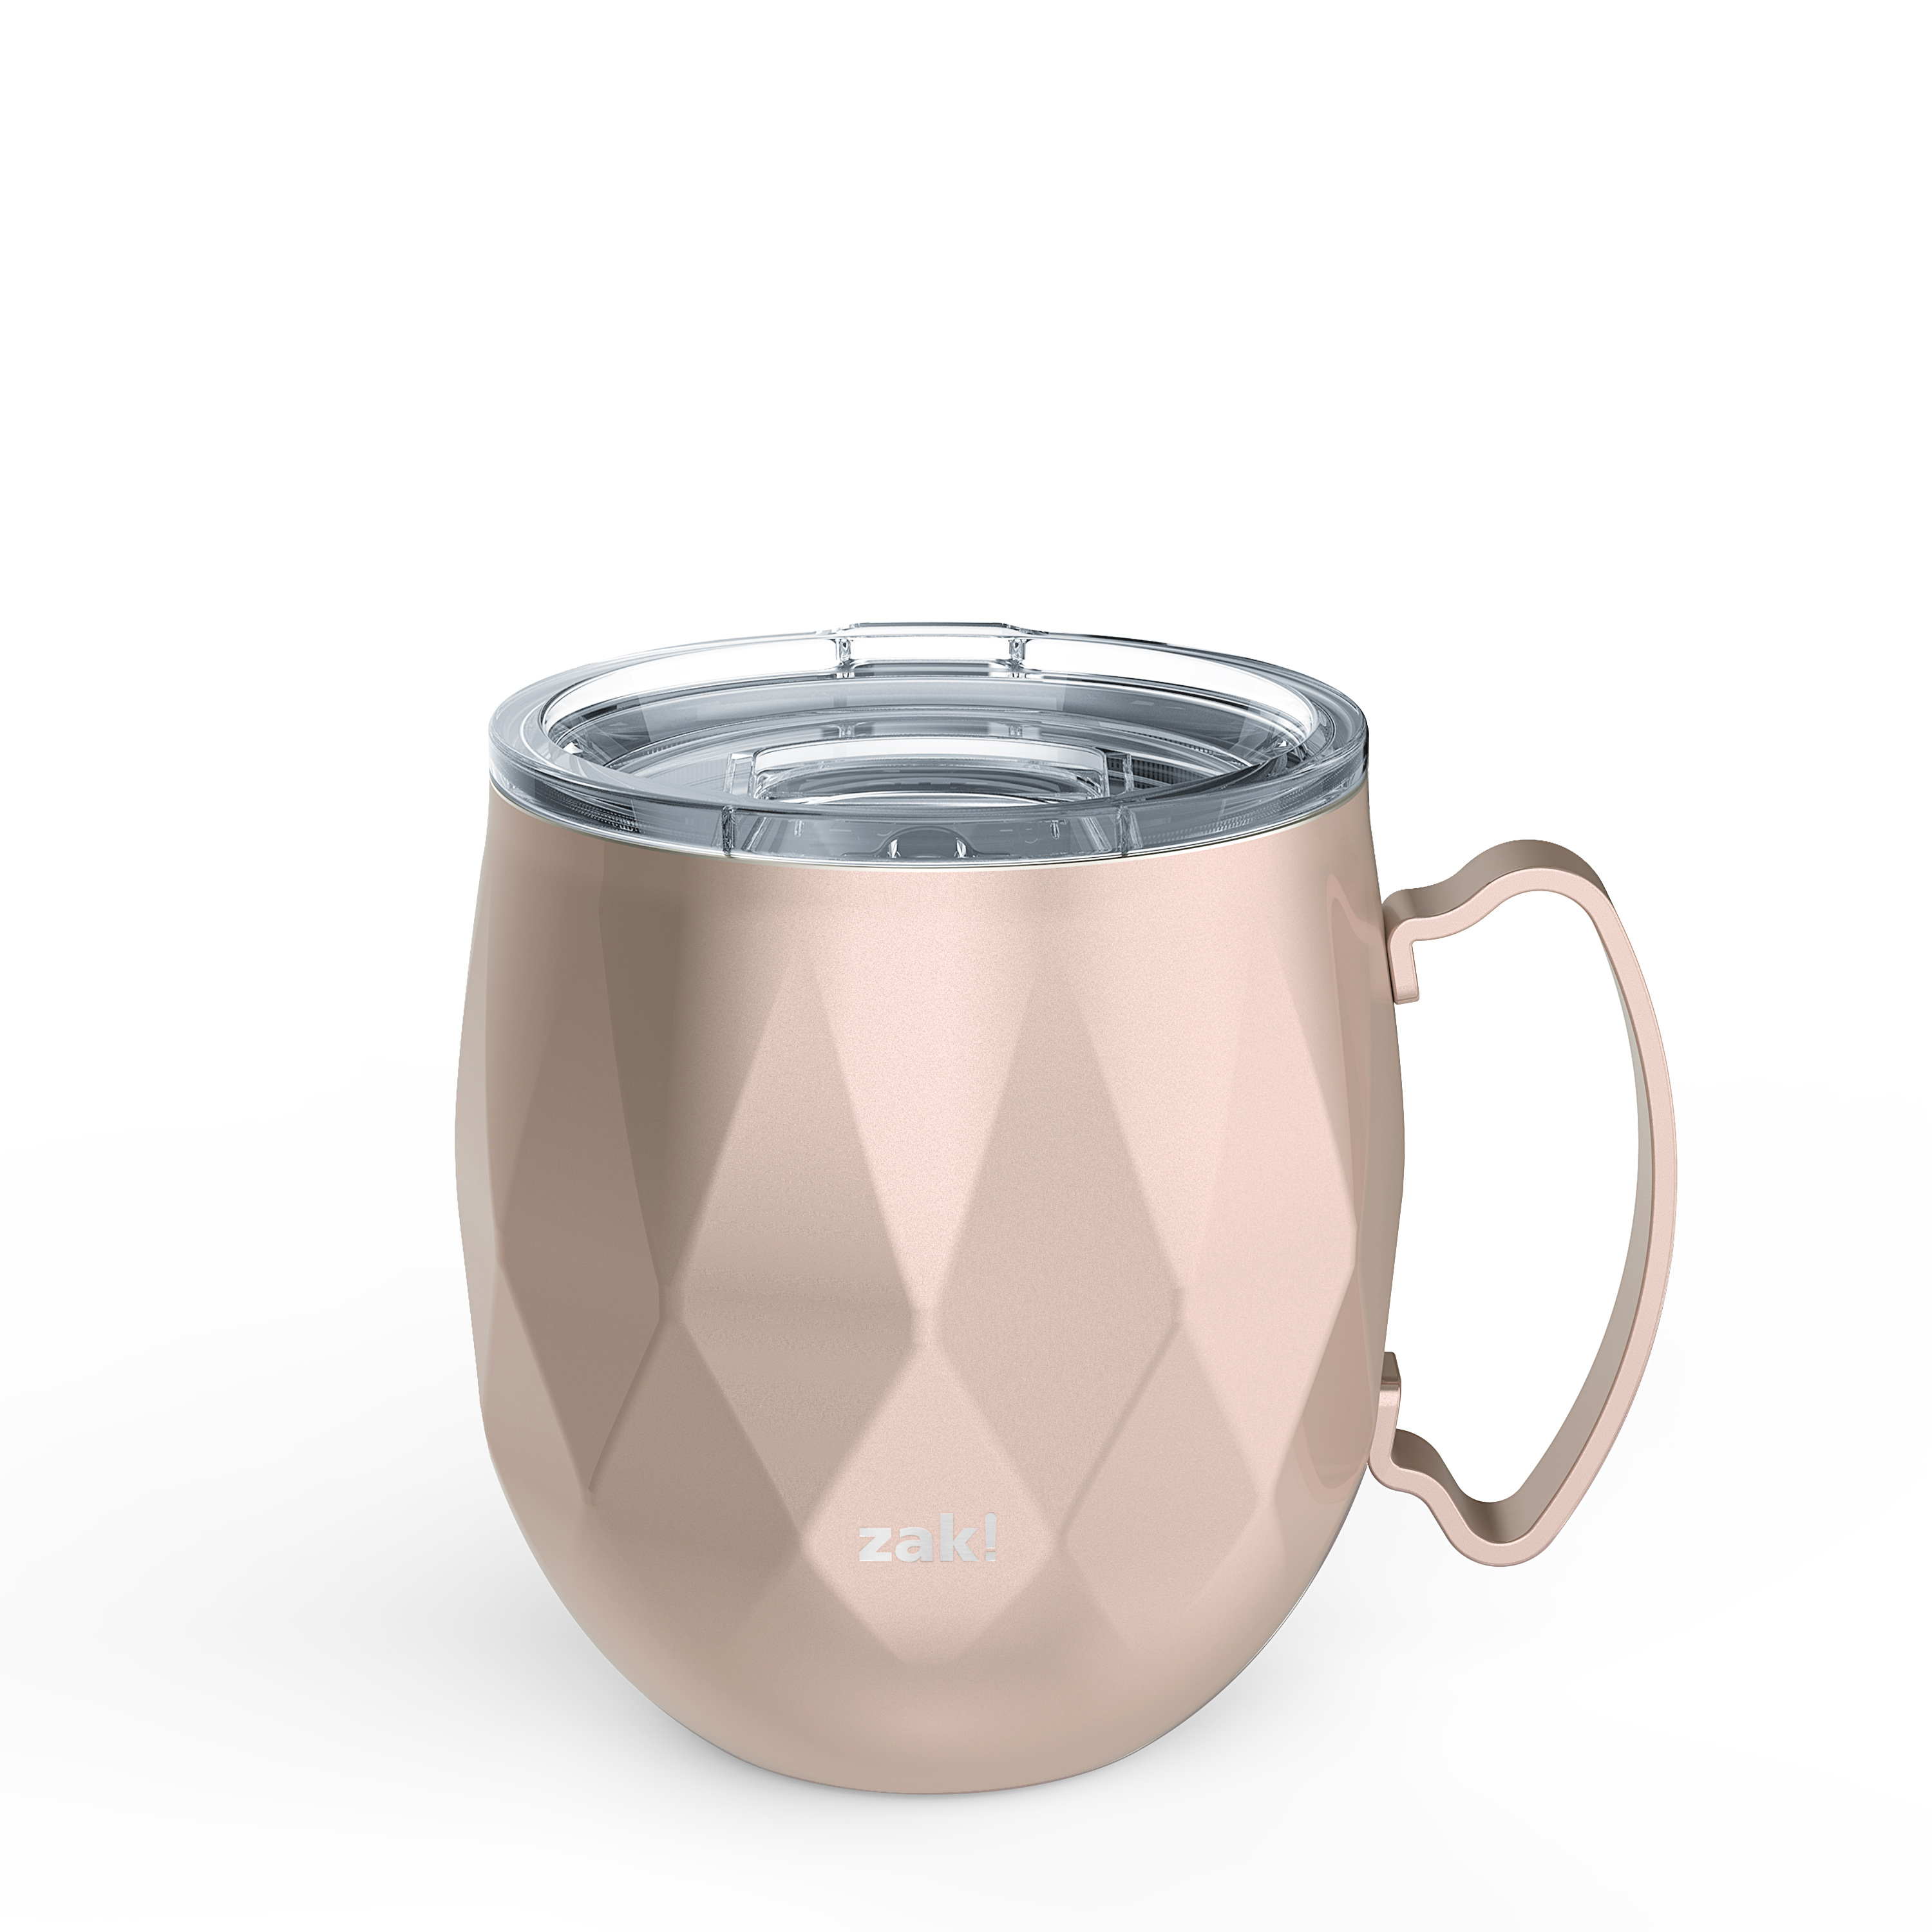 Fractal 19 ounce Mule Mug, Rose Gold slideshow image 1